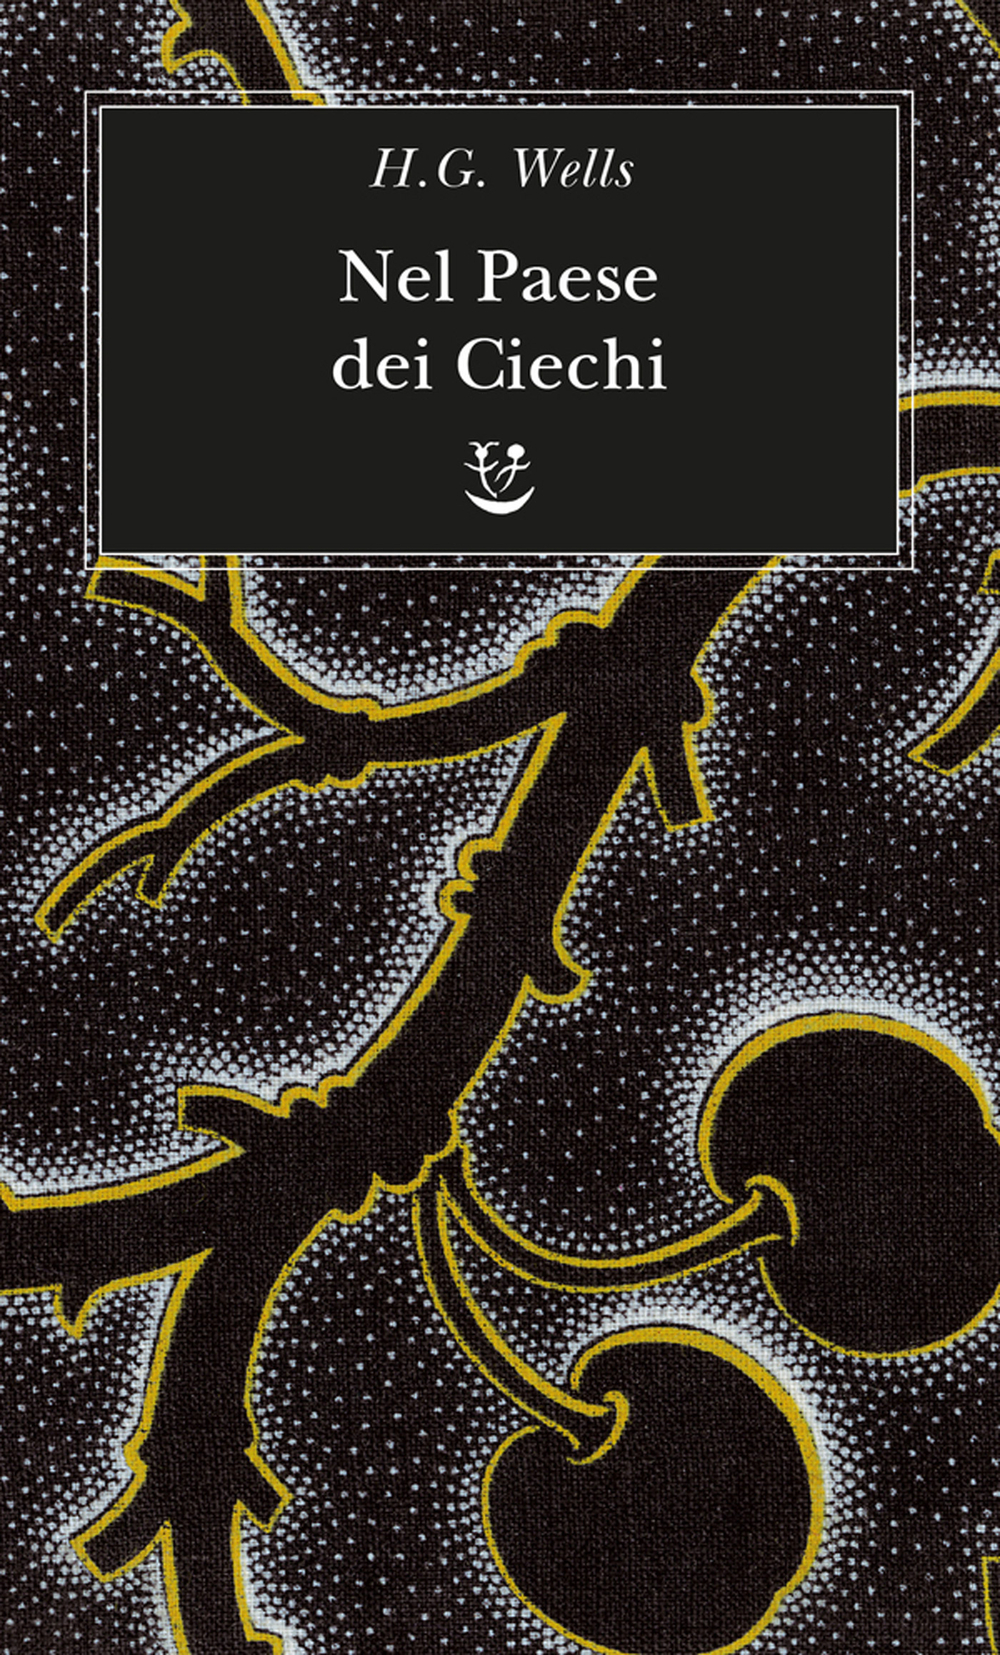 Nel Paese dei Ciechi (Italian language, Adelphi)